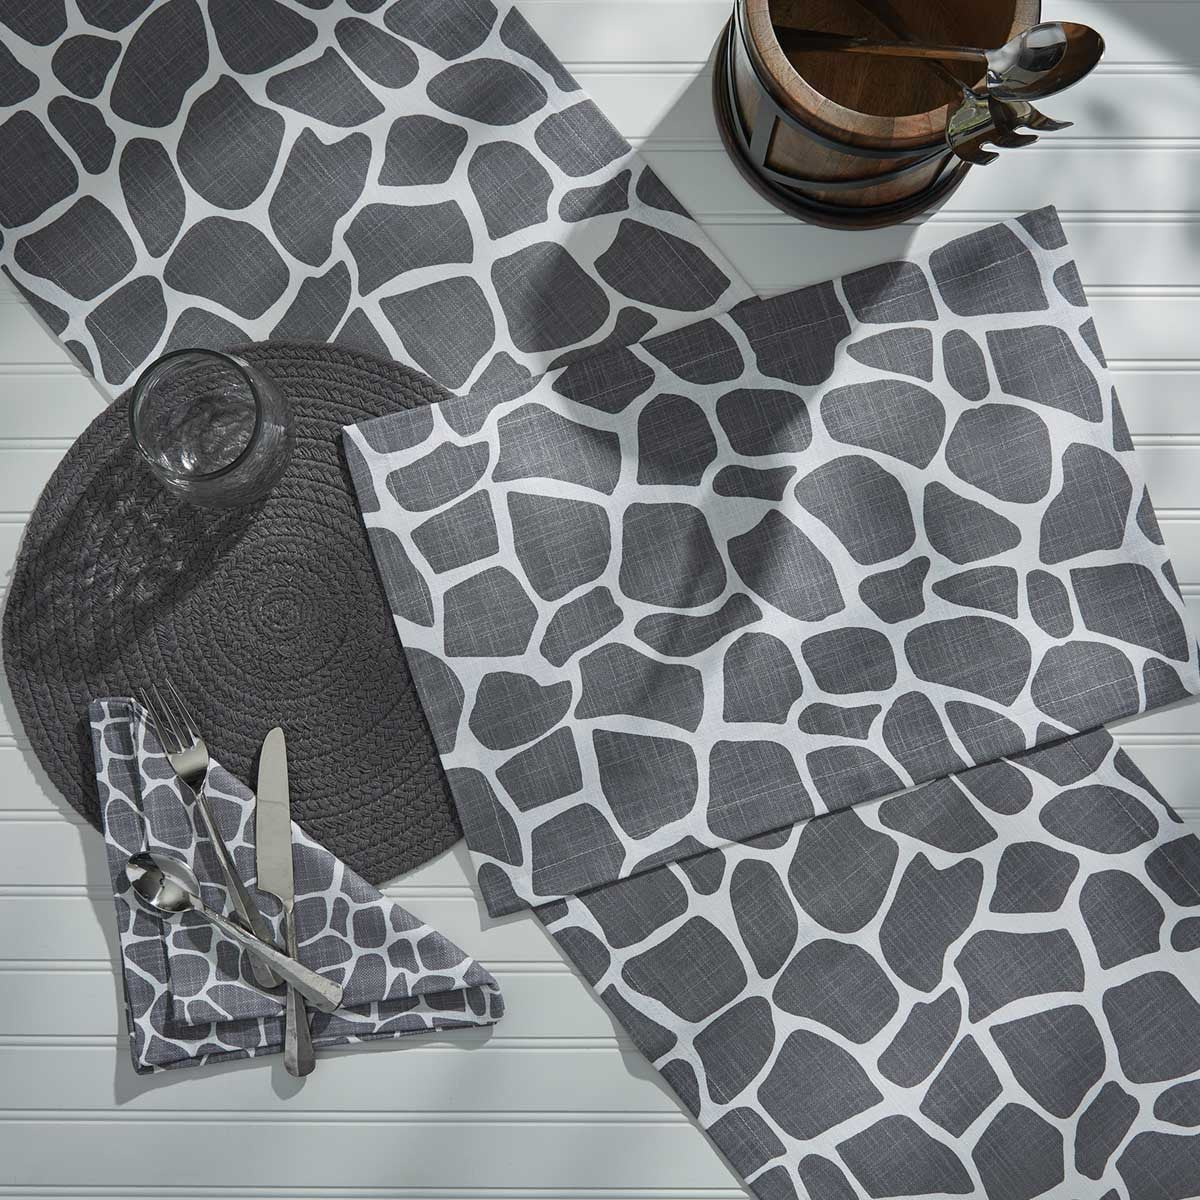 Giraffe Printed Placemat - Gray  Set of 4  Park Designs